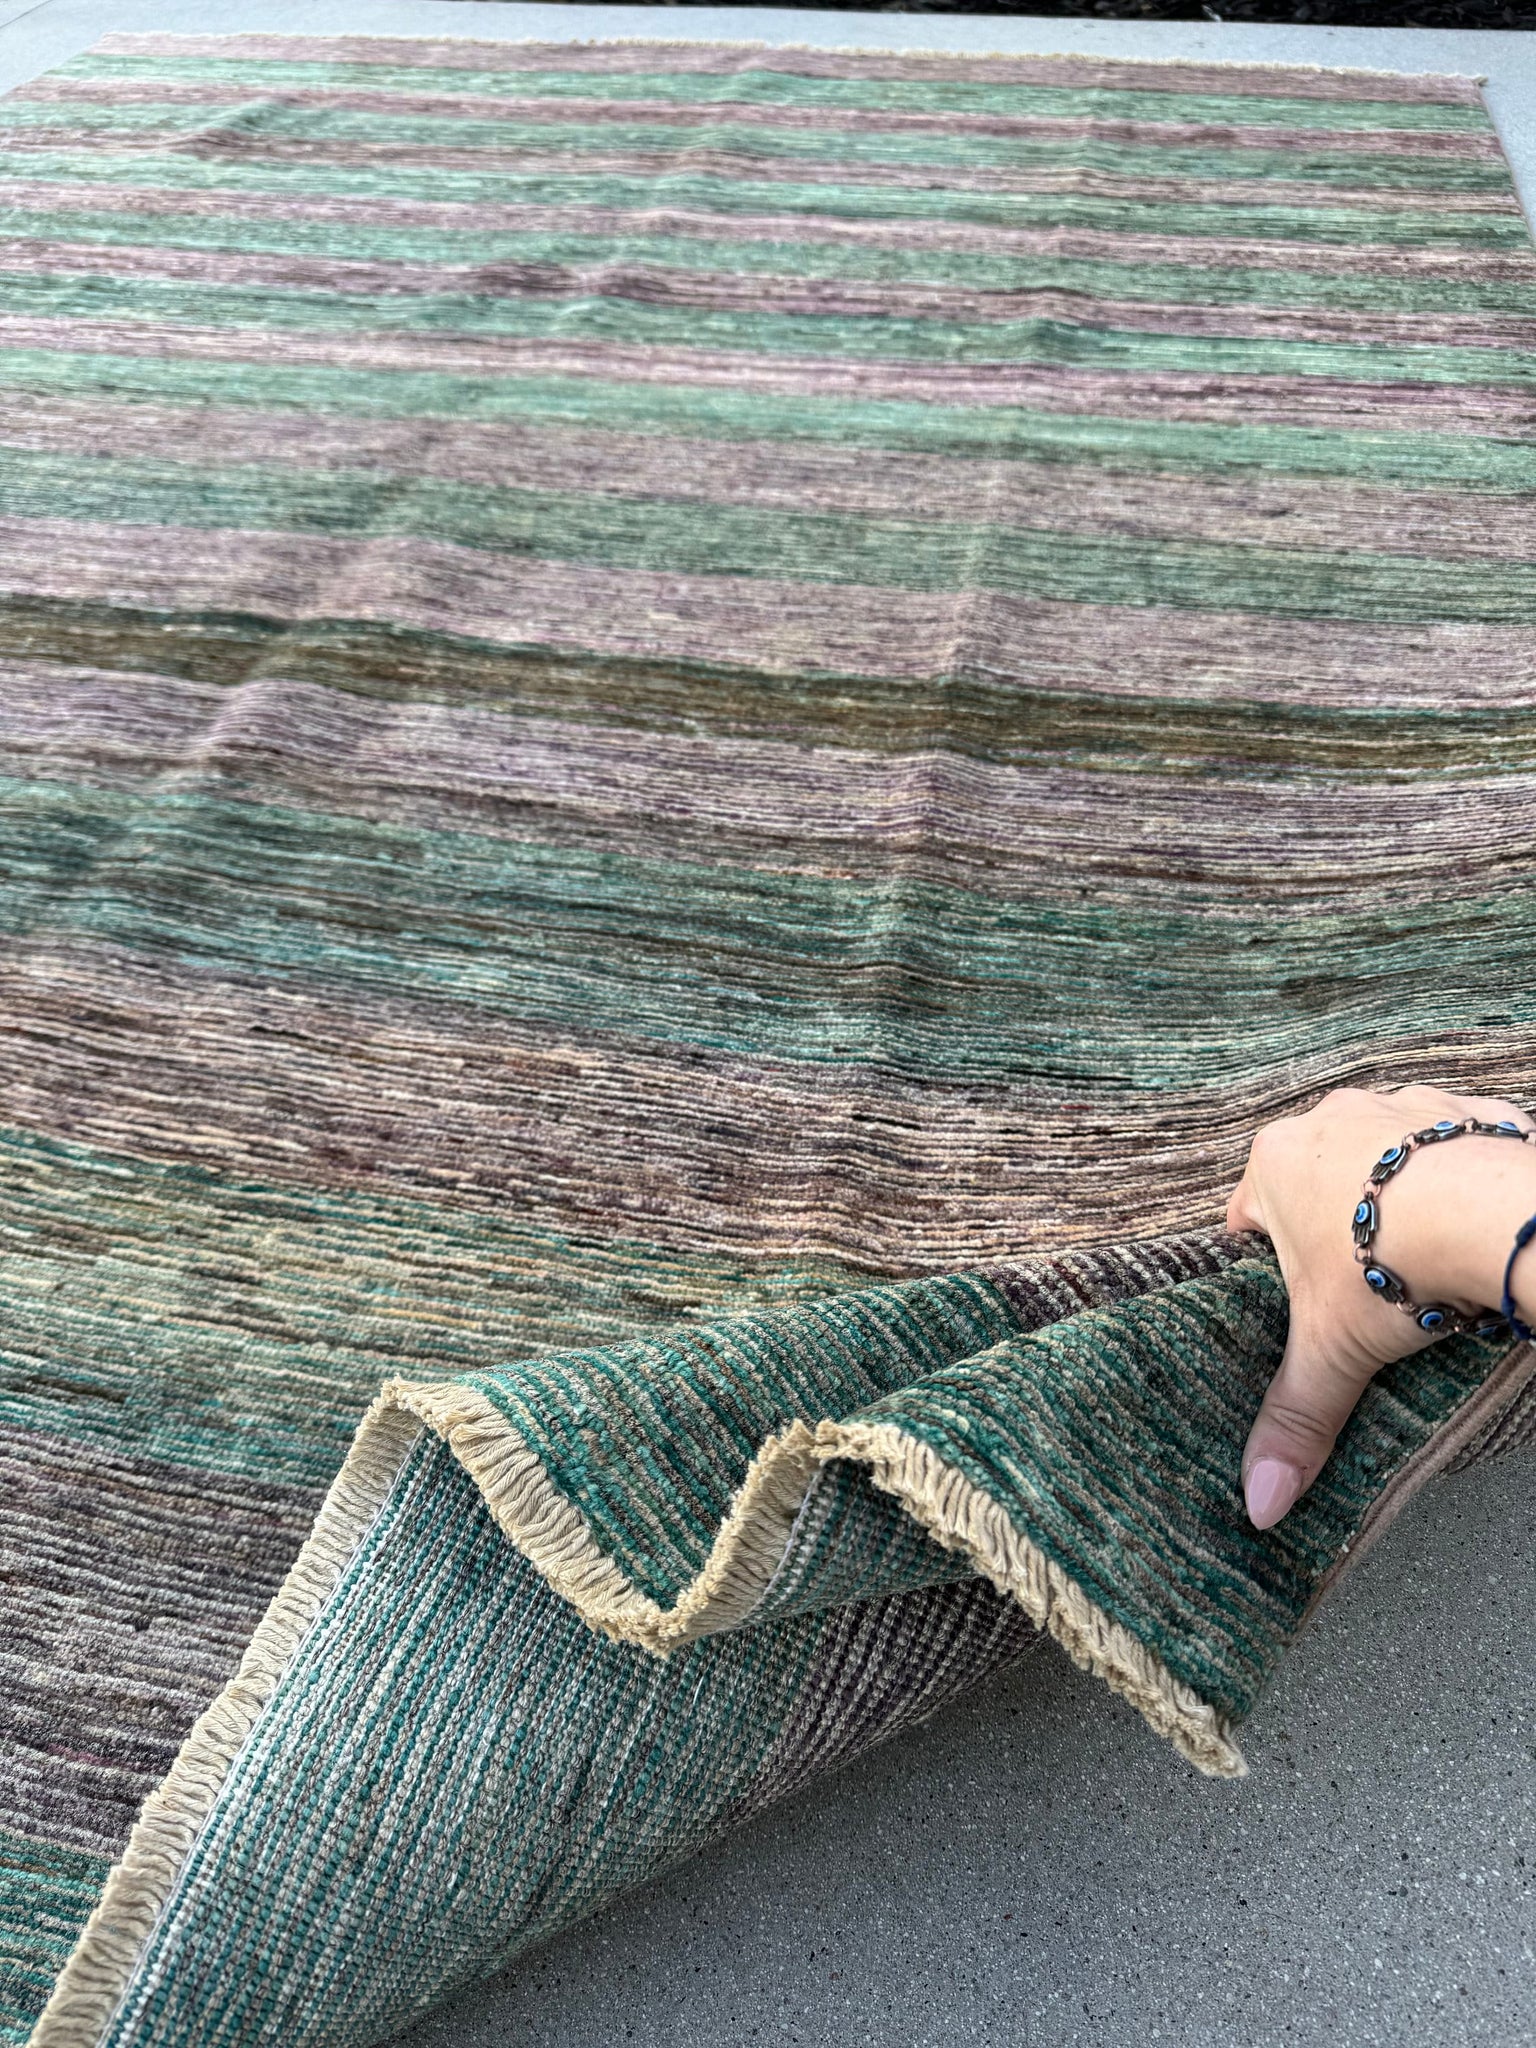 6x8-7x8 (200x240) Handmade Afghan Rug | Charcoal Grey Moss Green Forest Green Cream White | Wool Handmade Stripes Natural Modern Fringed